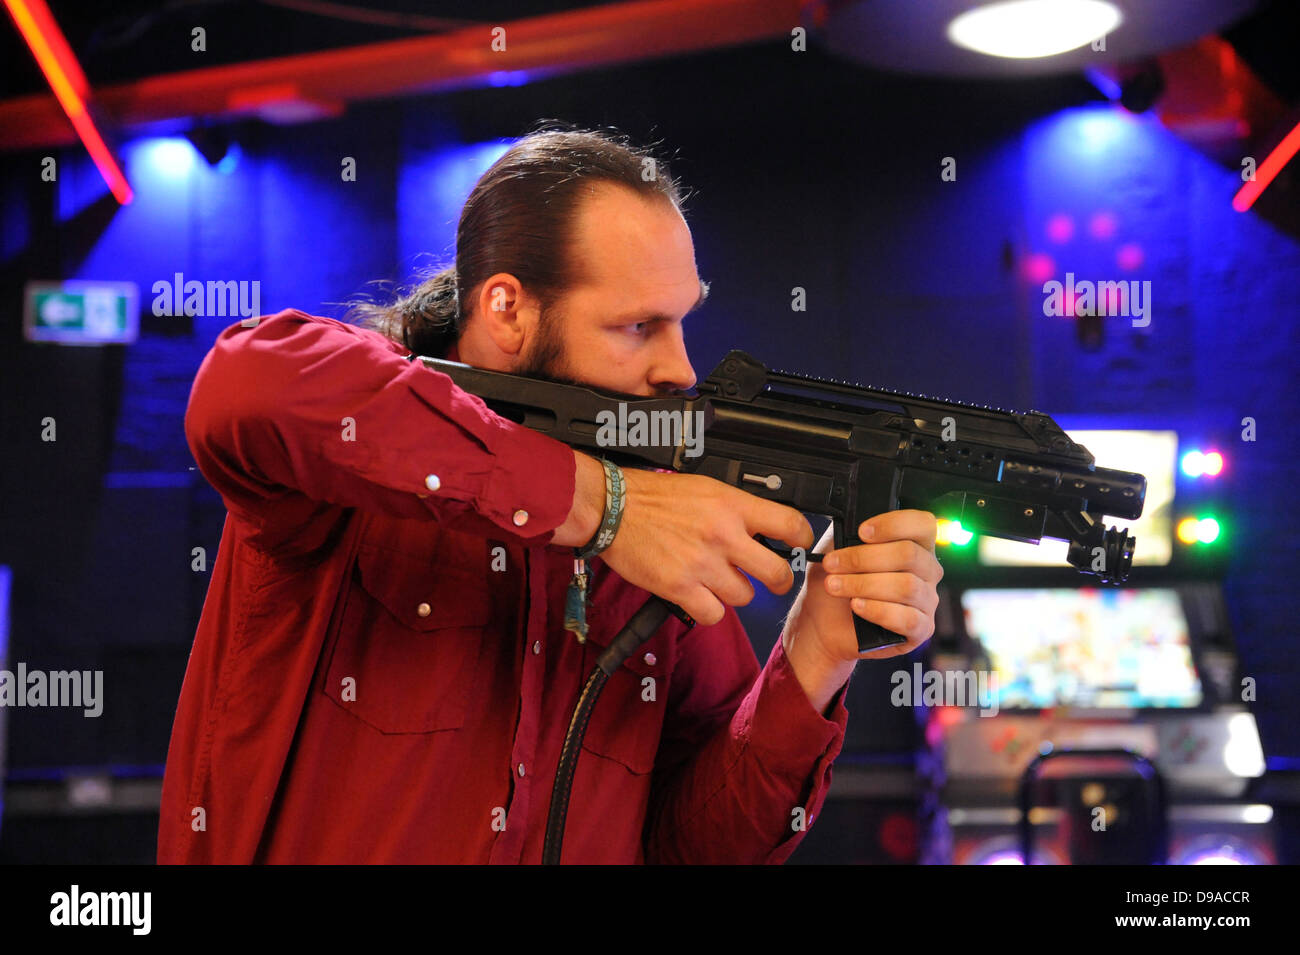 Man firing a gun in an arcade game at Namco funscape arcade, london. Stock Photo